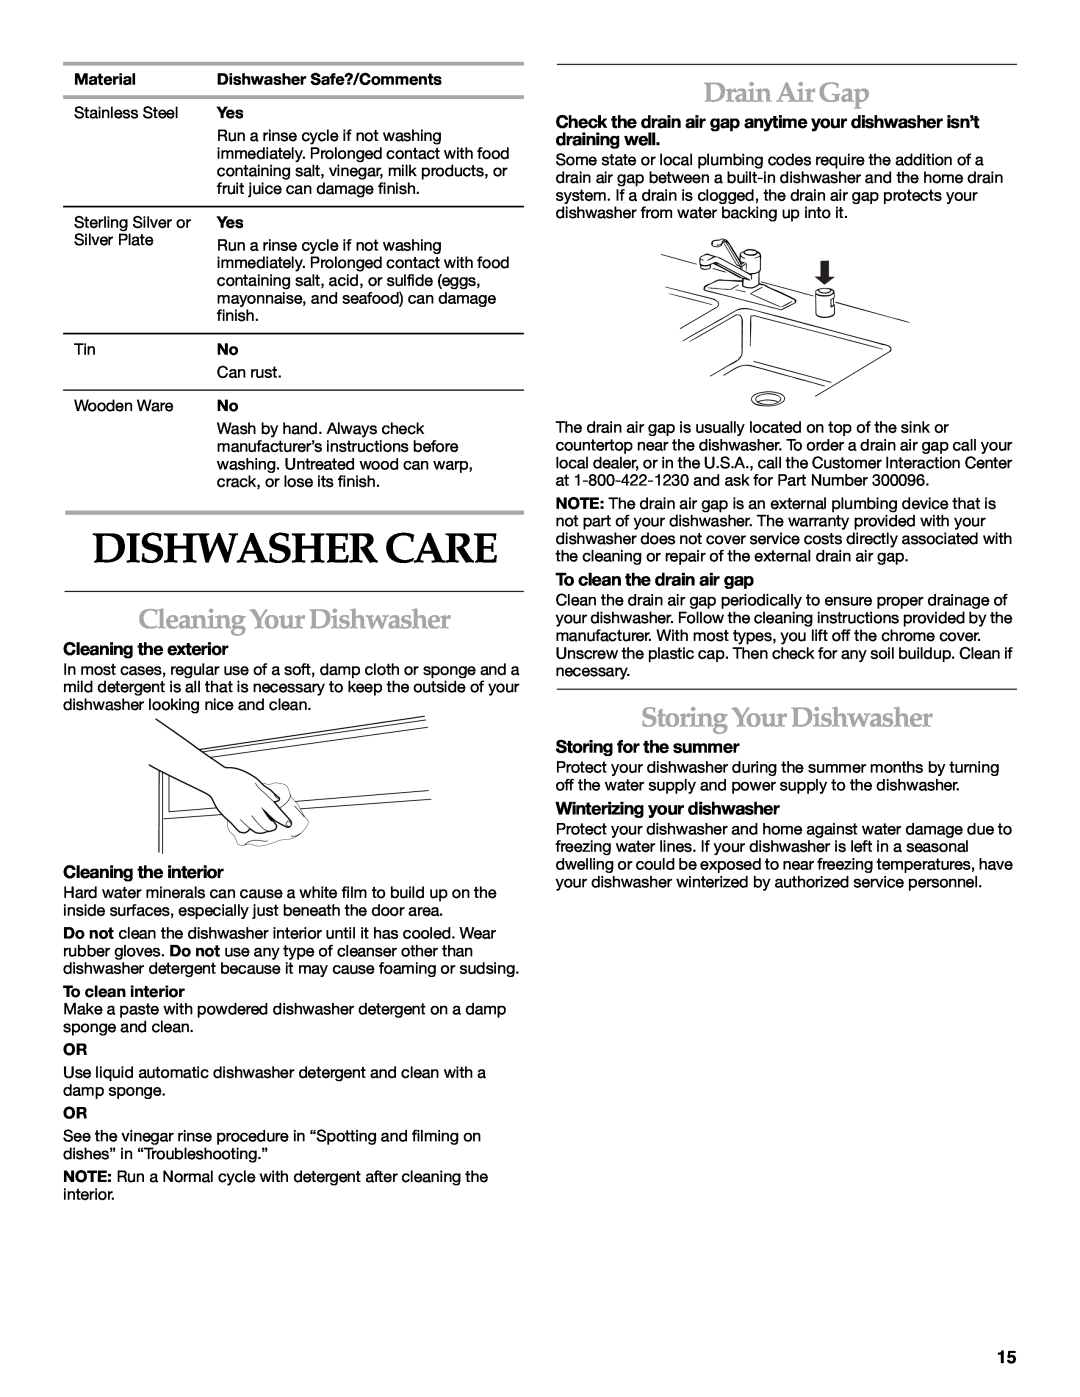 KitchenAid KUDR01TJ manual Dishwasher Care, Cleaning Your Dishwasher, Drain Air Gap, Storing Your Dishwasher 